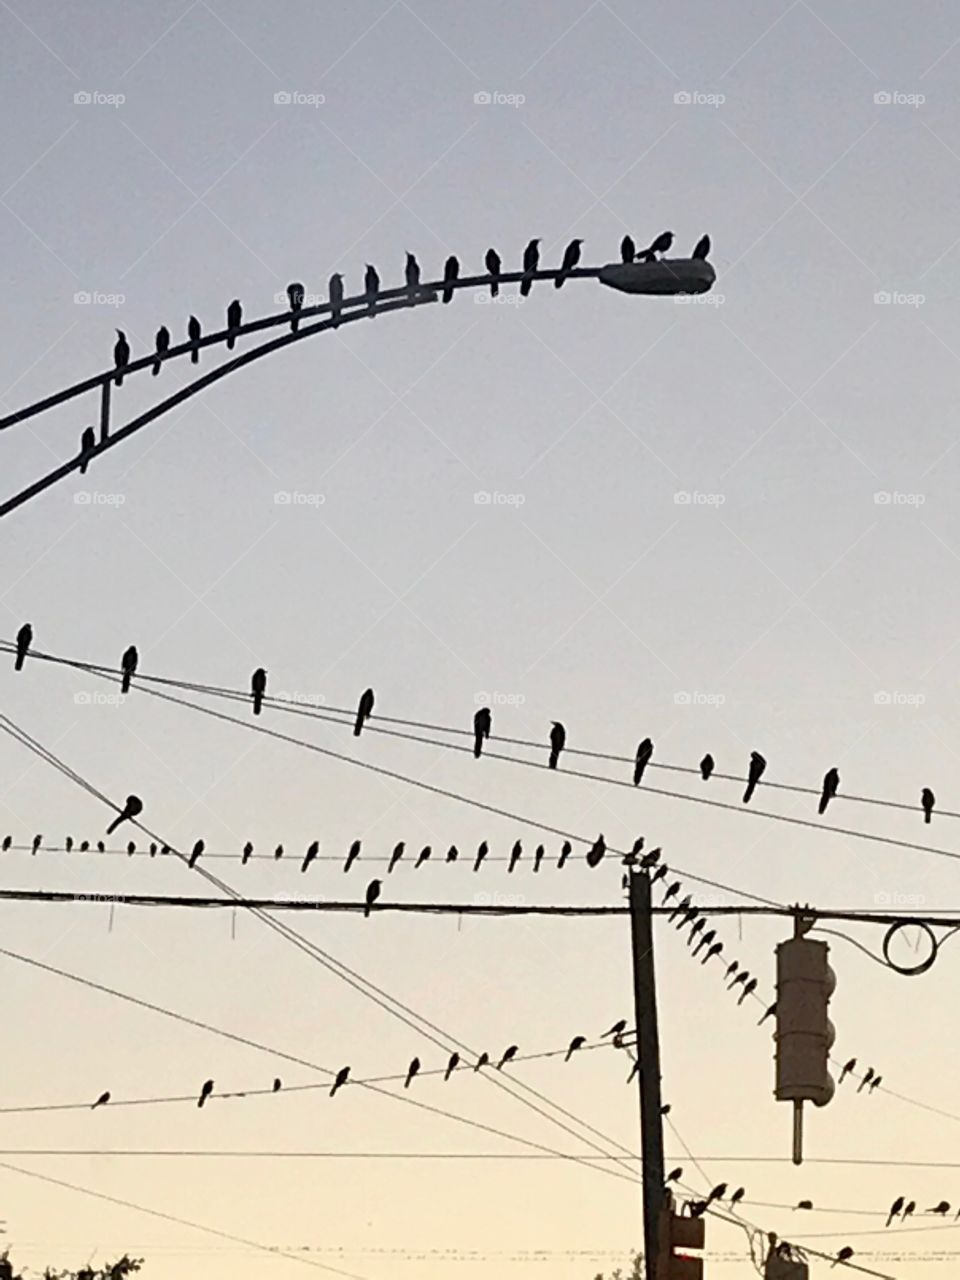 Birds on wires 